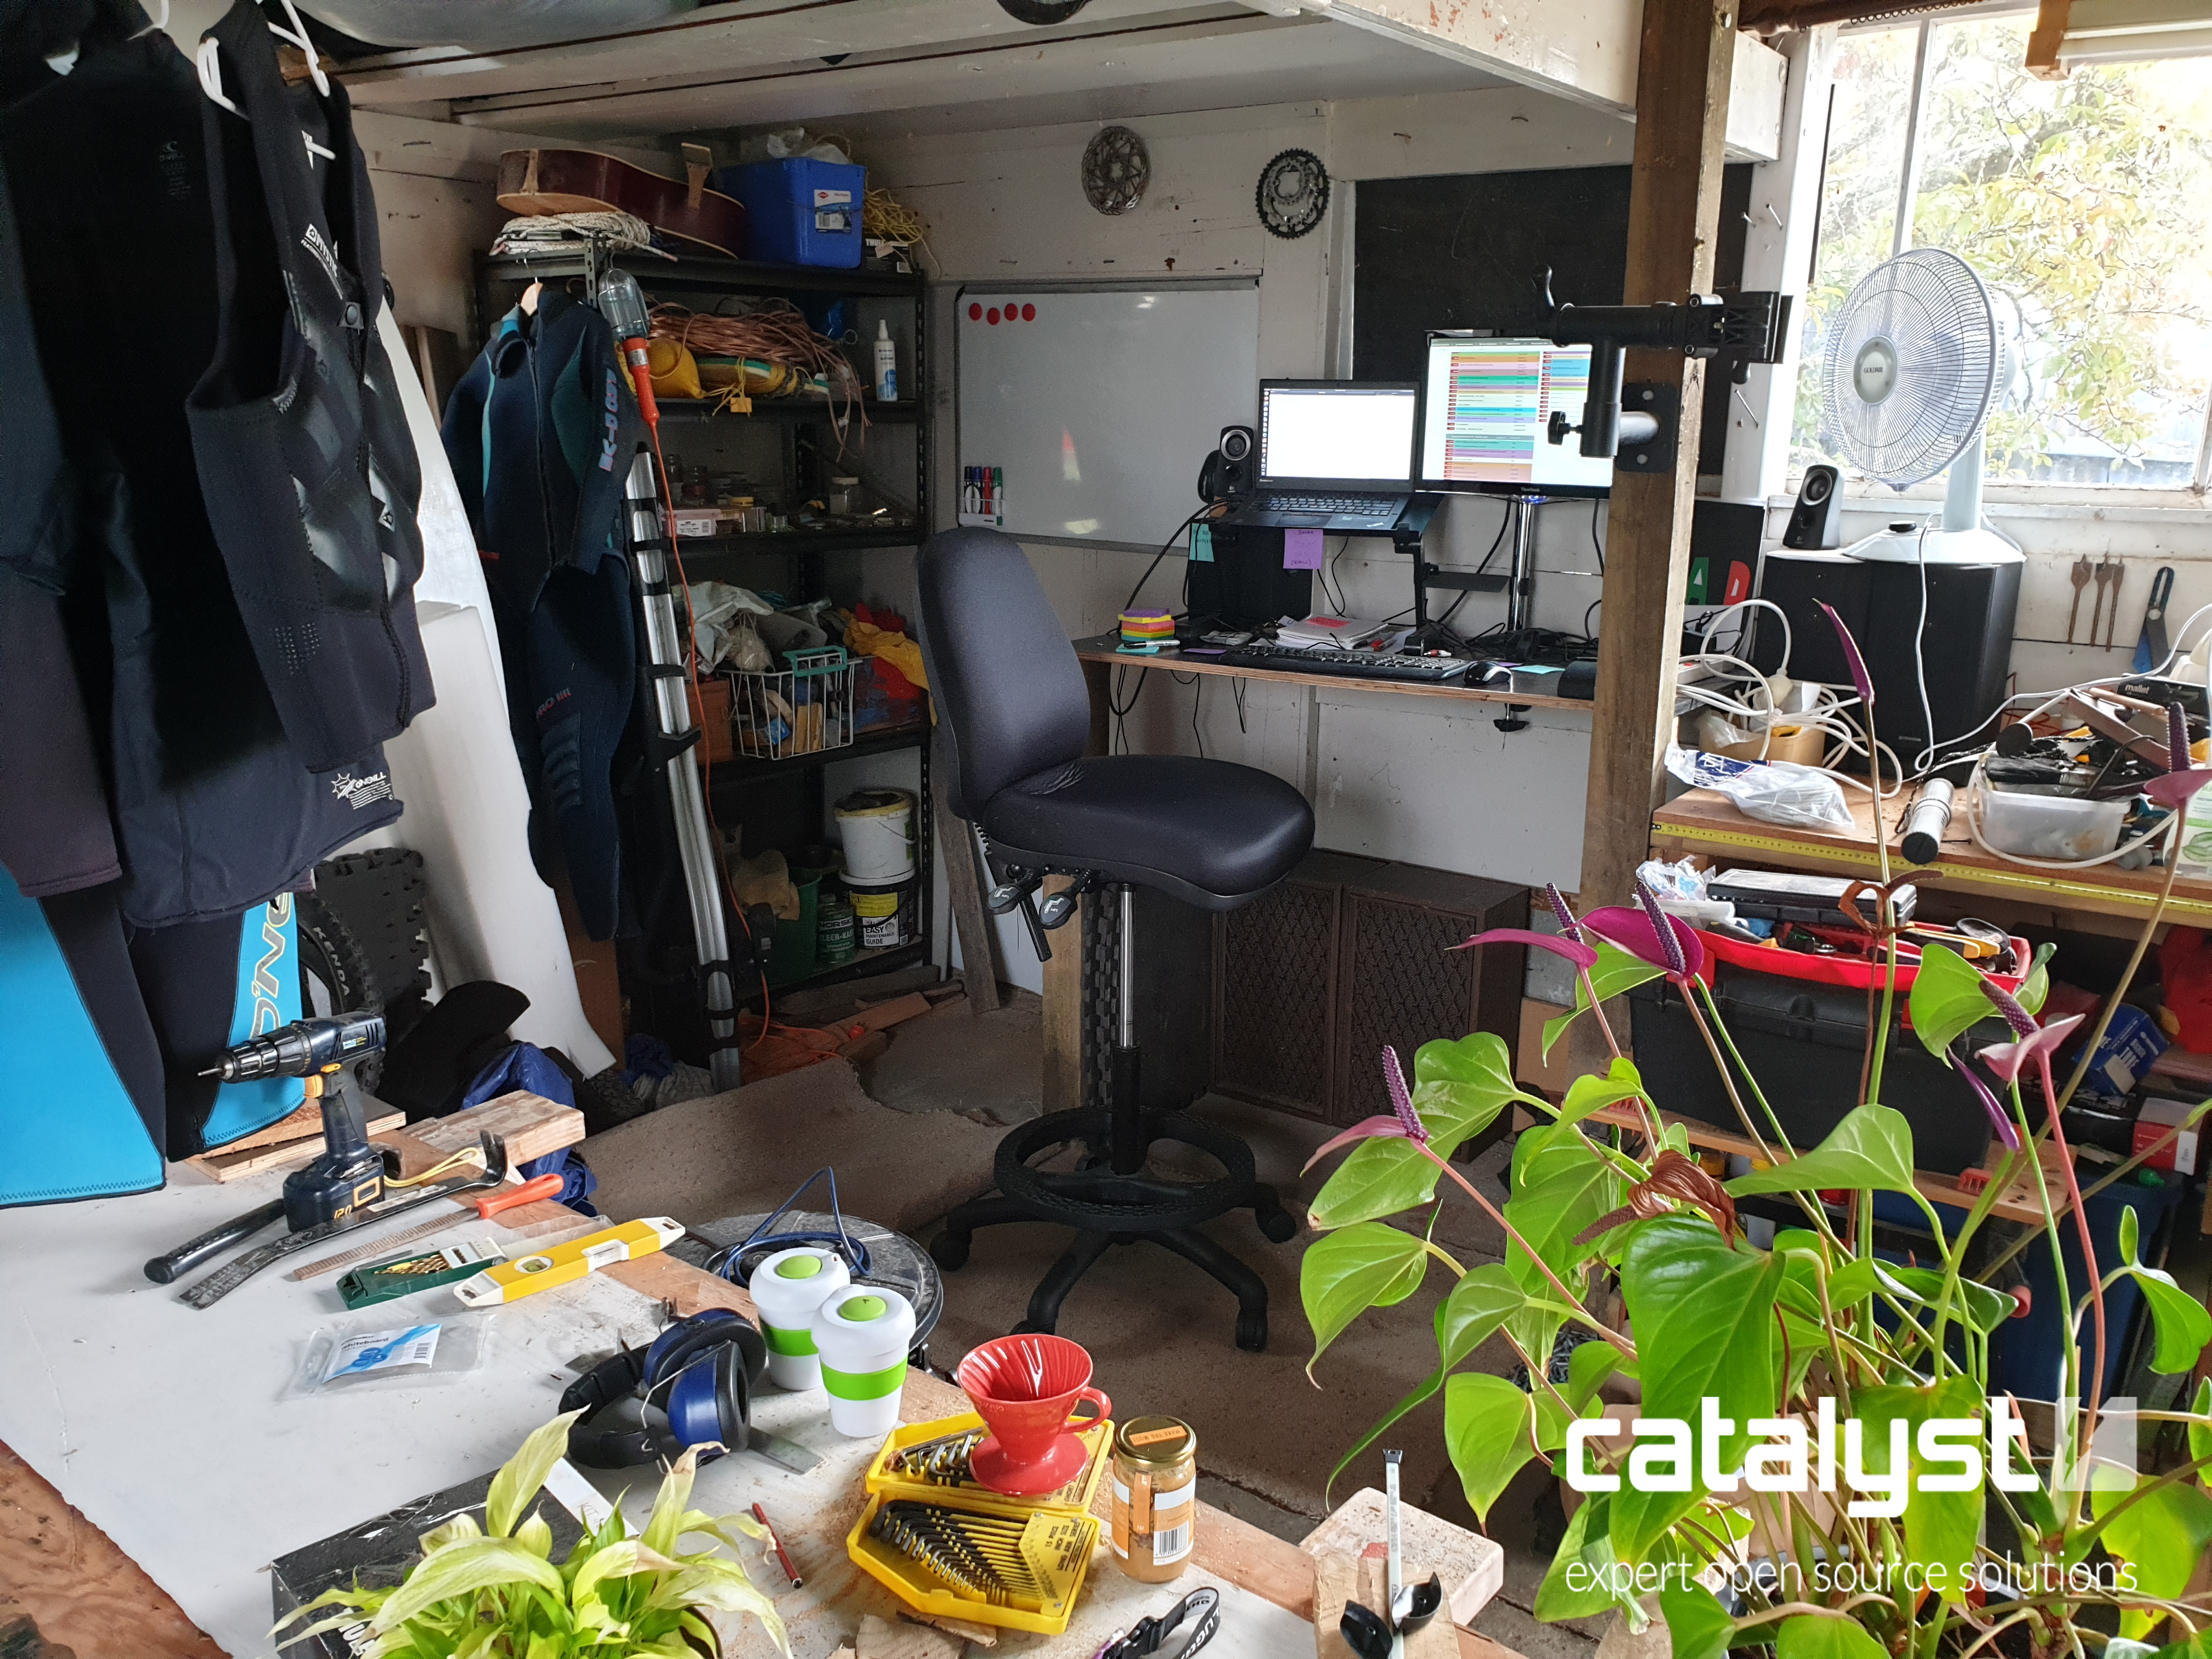 Alan's home made desk set up in his garage